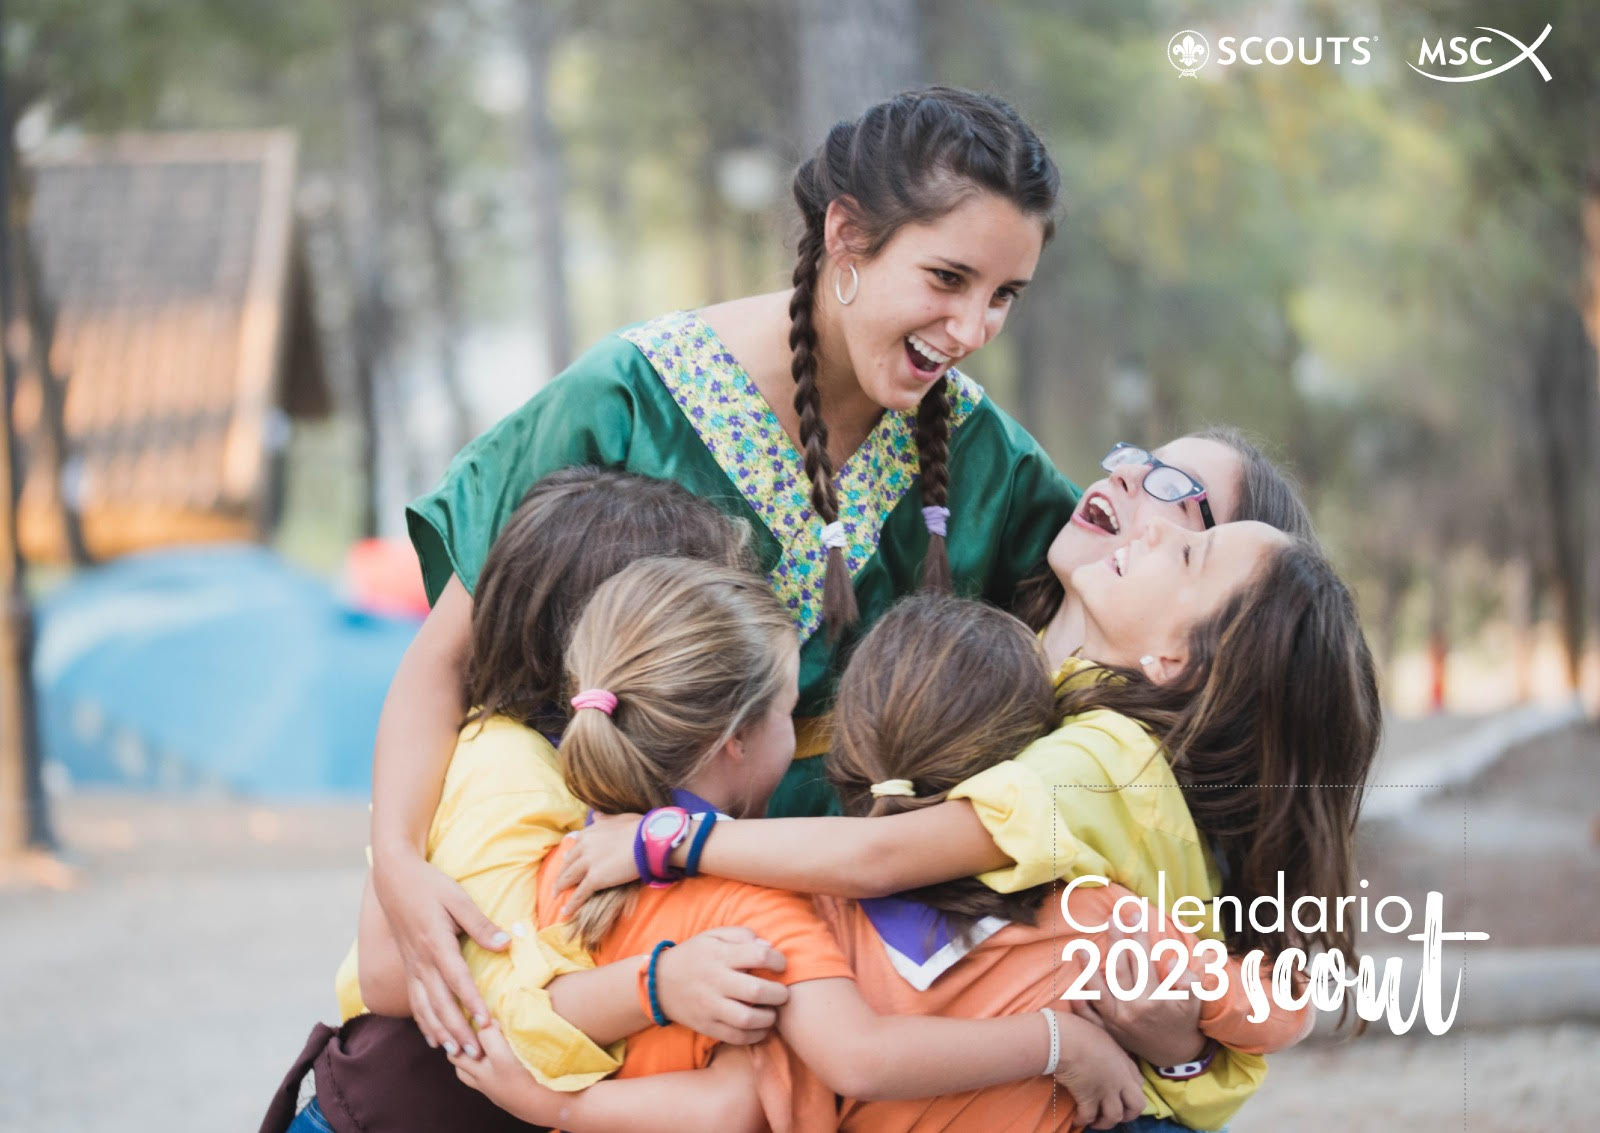 Calendarios Scouts MSC 2023